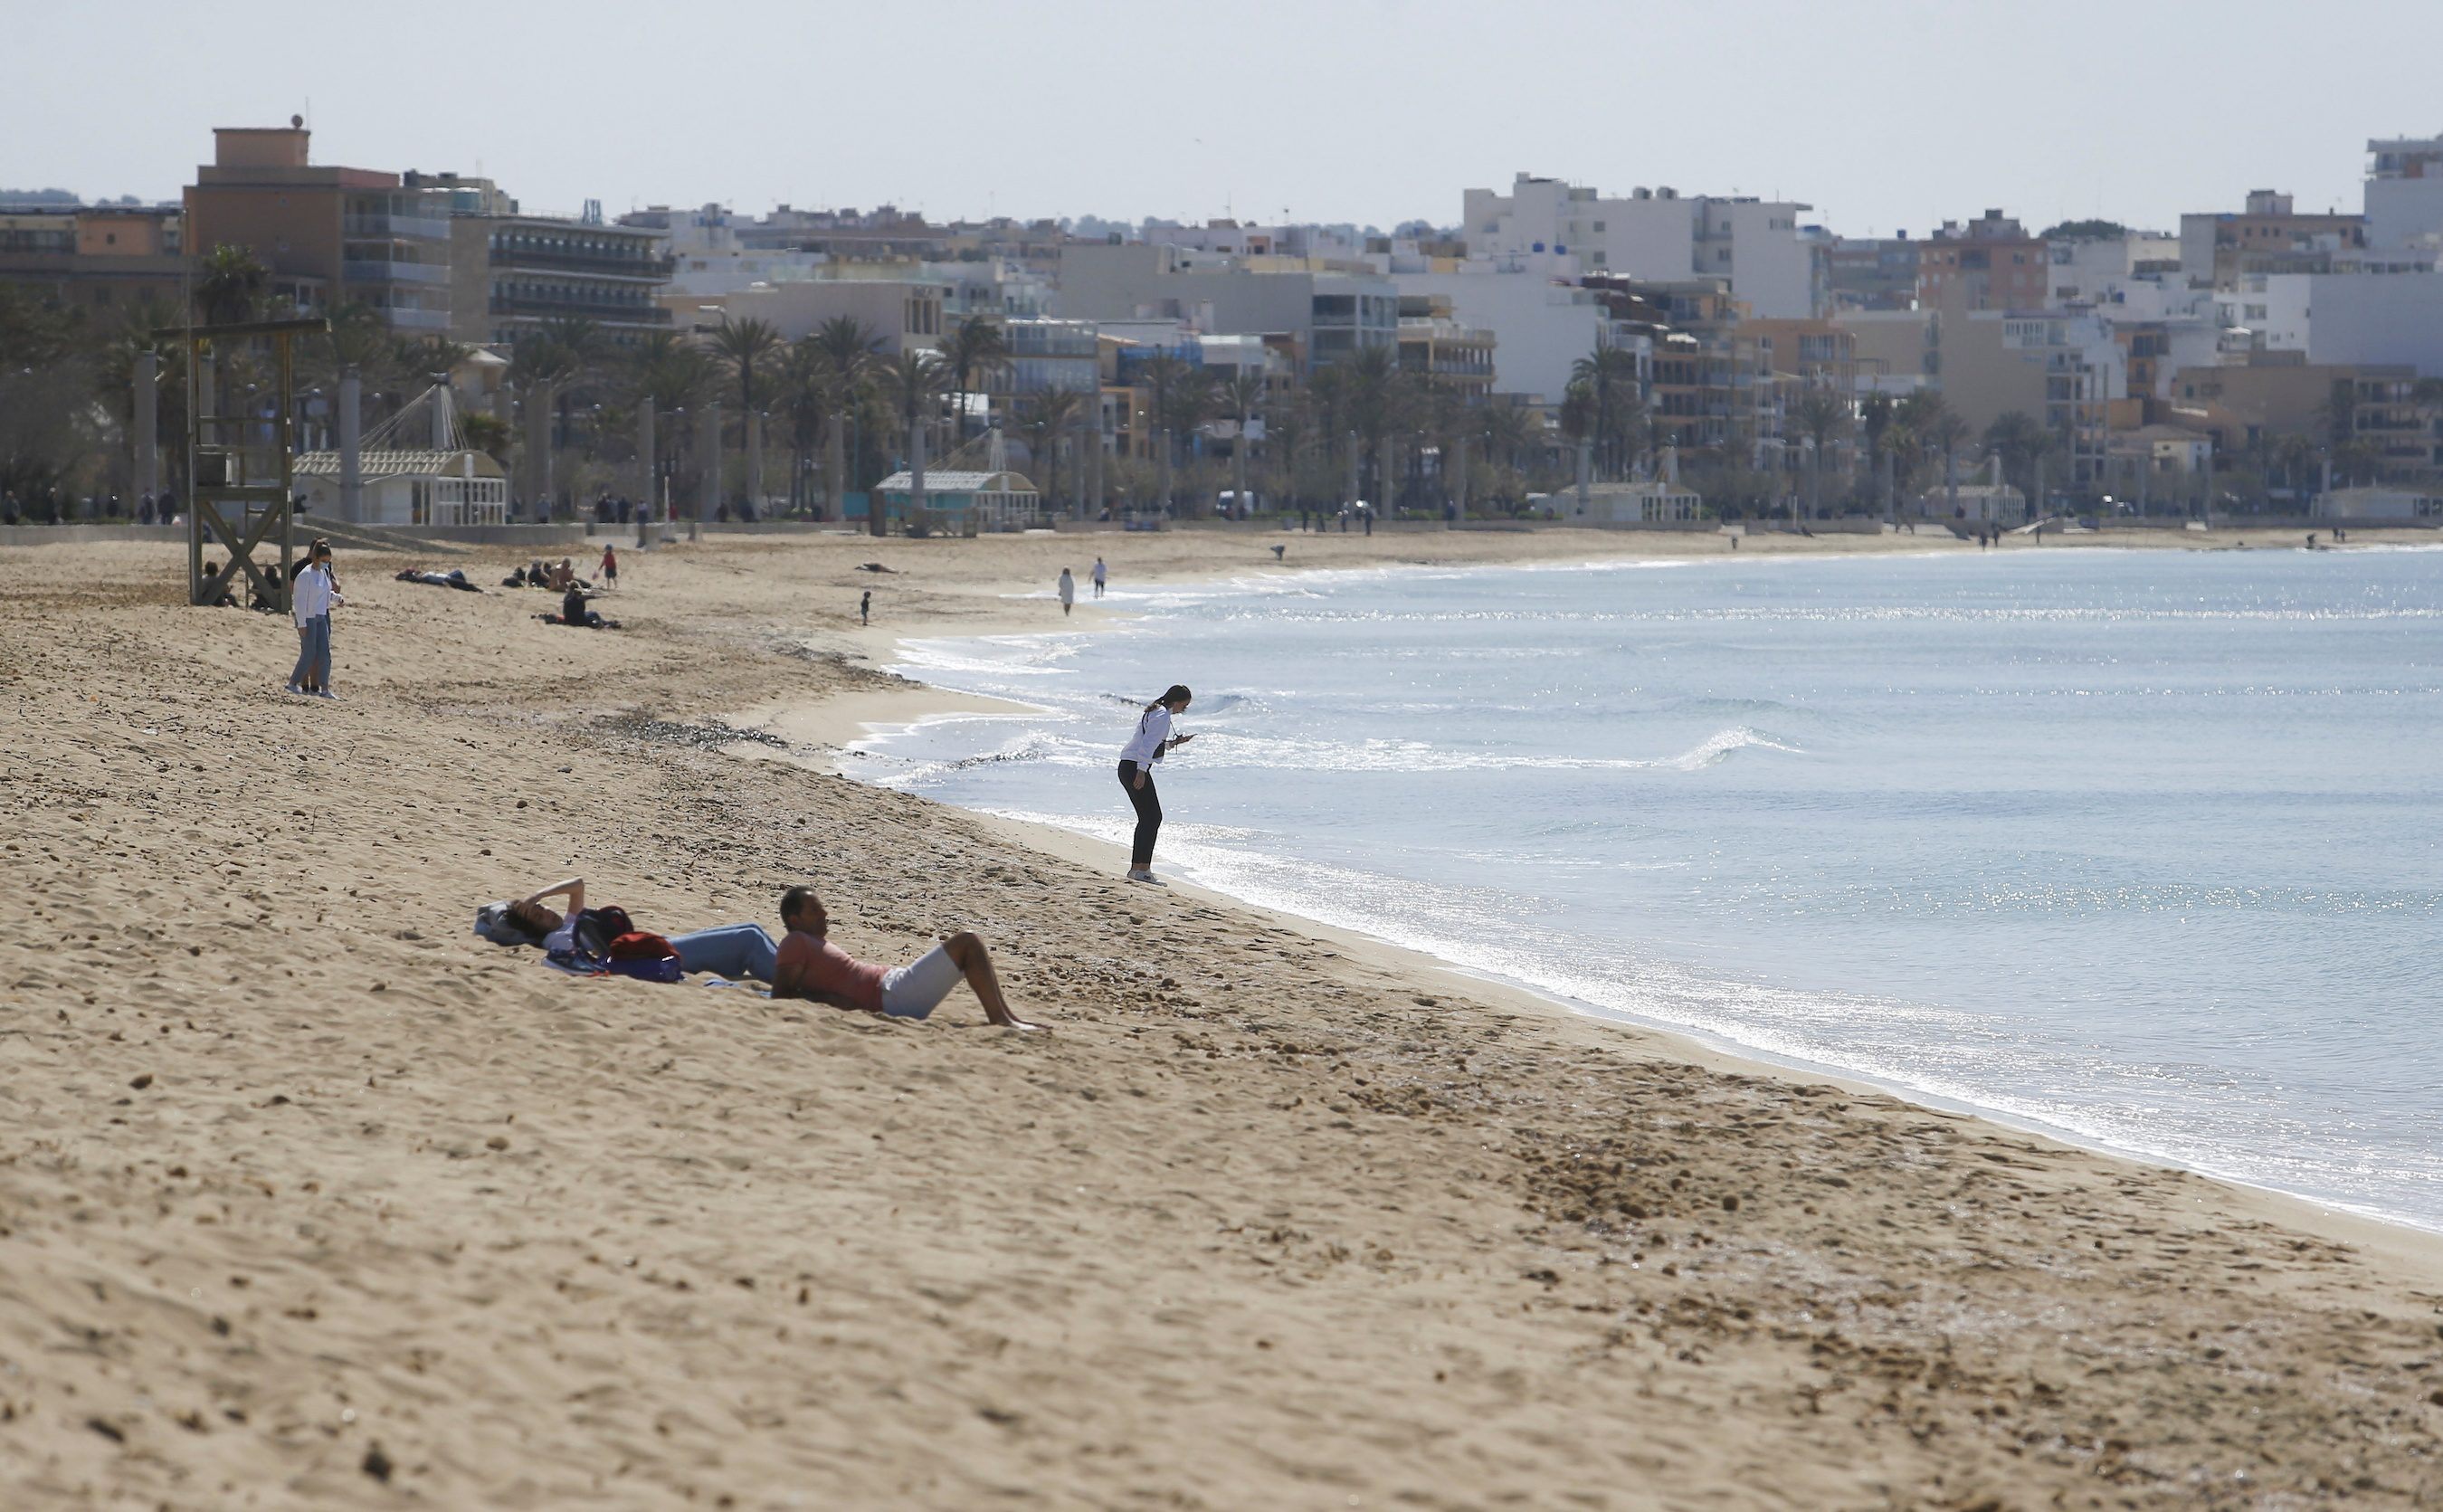 Mallorca’s tourism revival threatened if Germany brings back quarantine